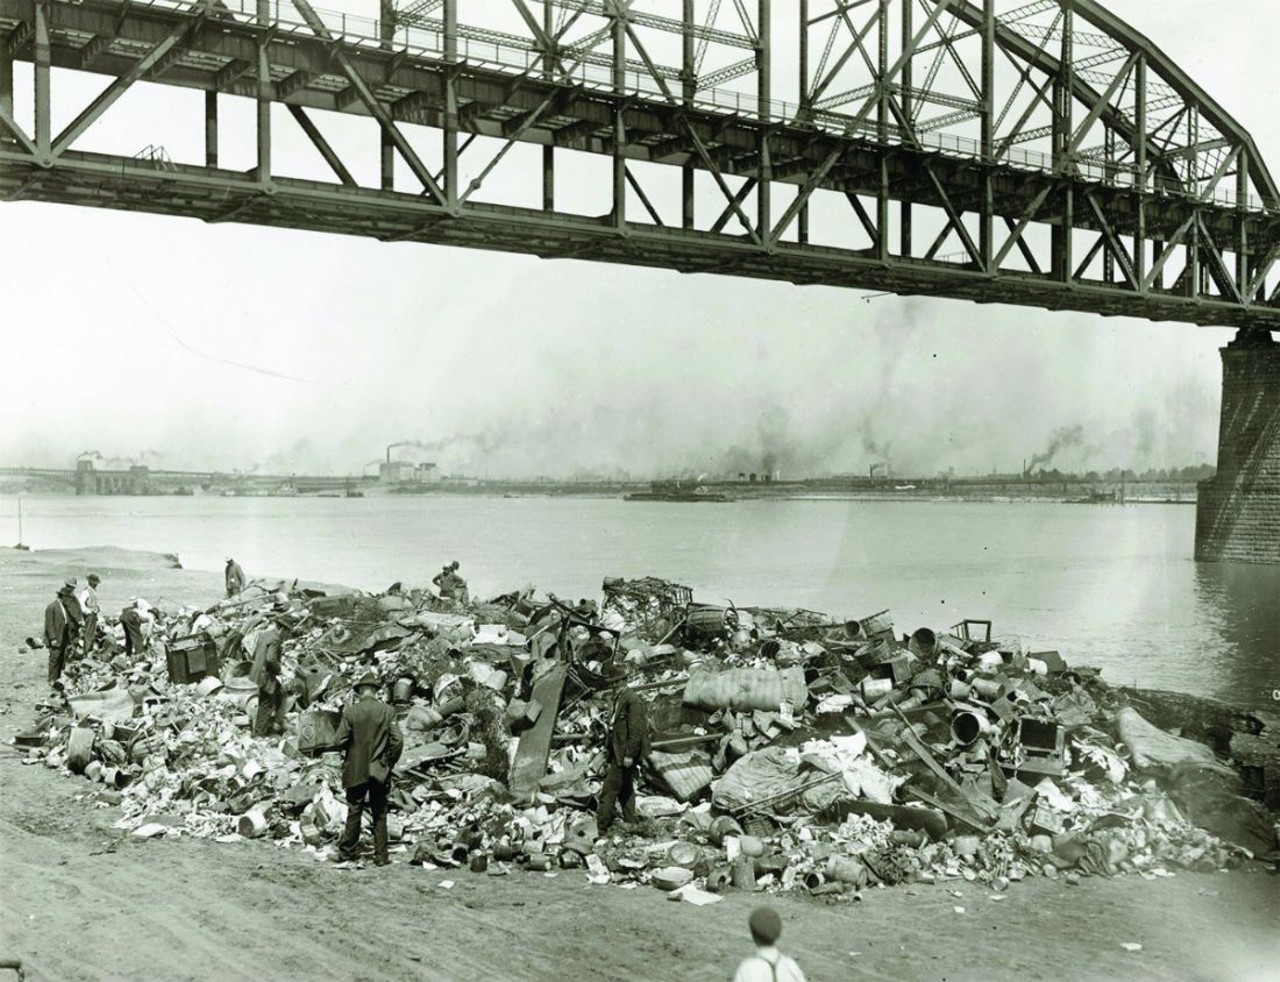 Men going through a rubbish pile on the riverfront south of Municipal Free Bridge (MacArthur). Photograph, 1910.